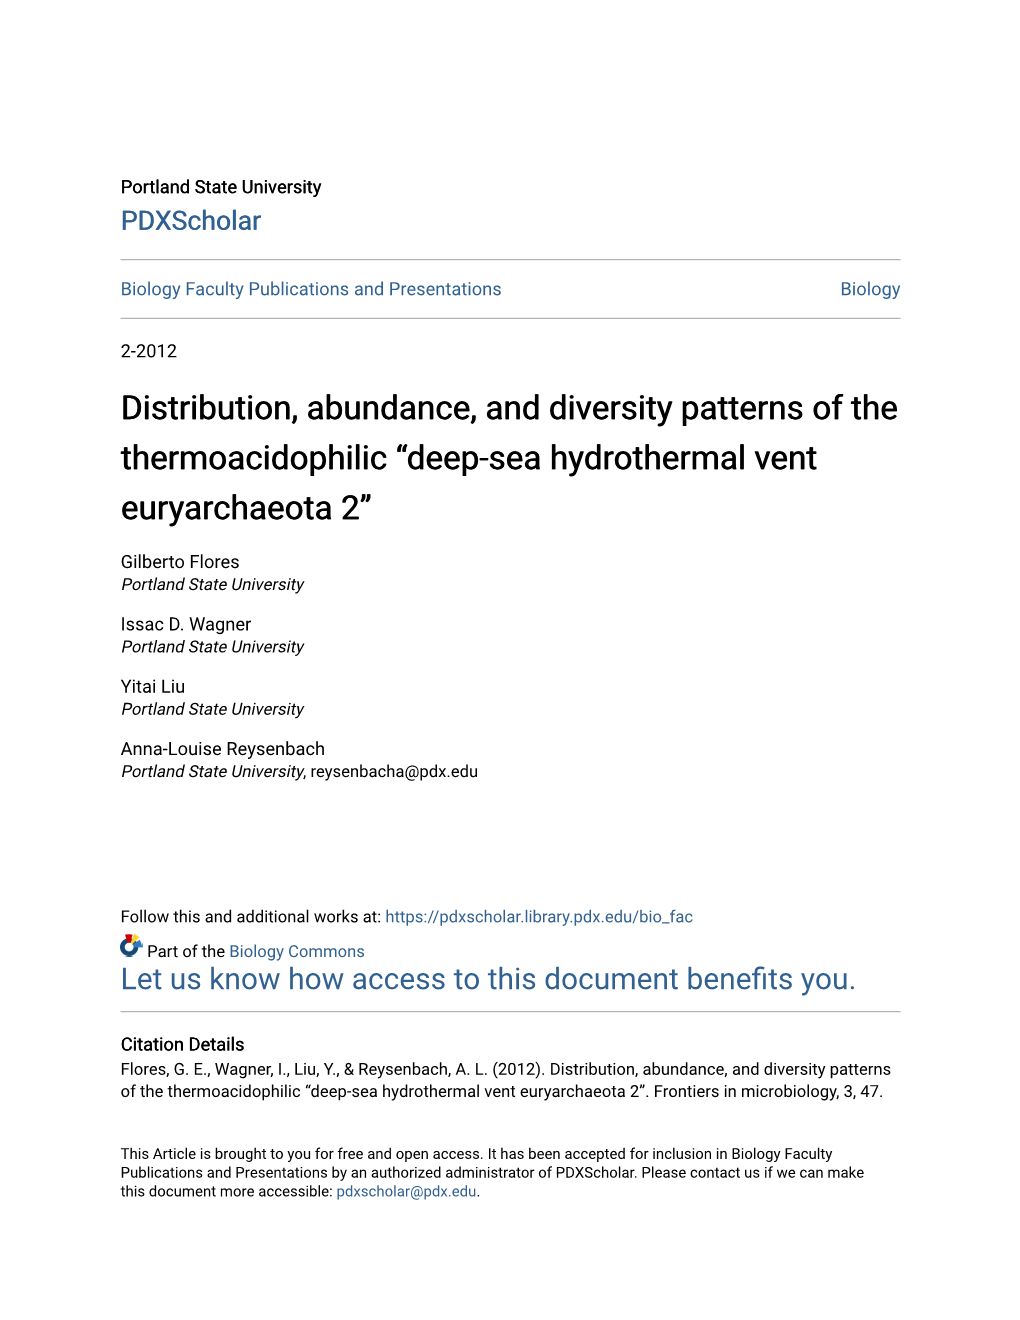 Deep-Sea Hydrothermal Vent Euryarchaeota 2”